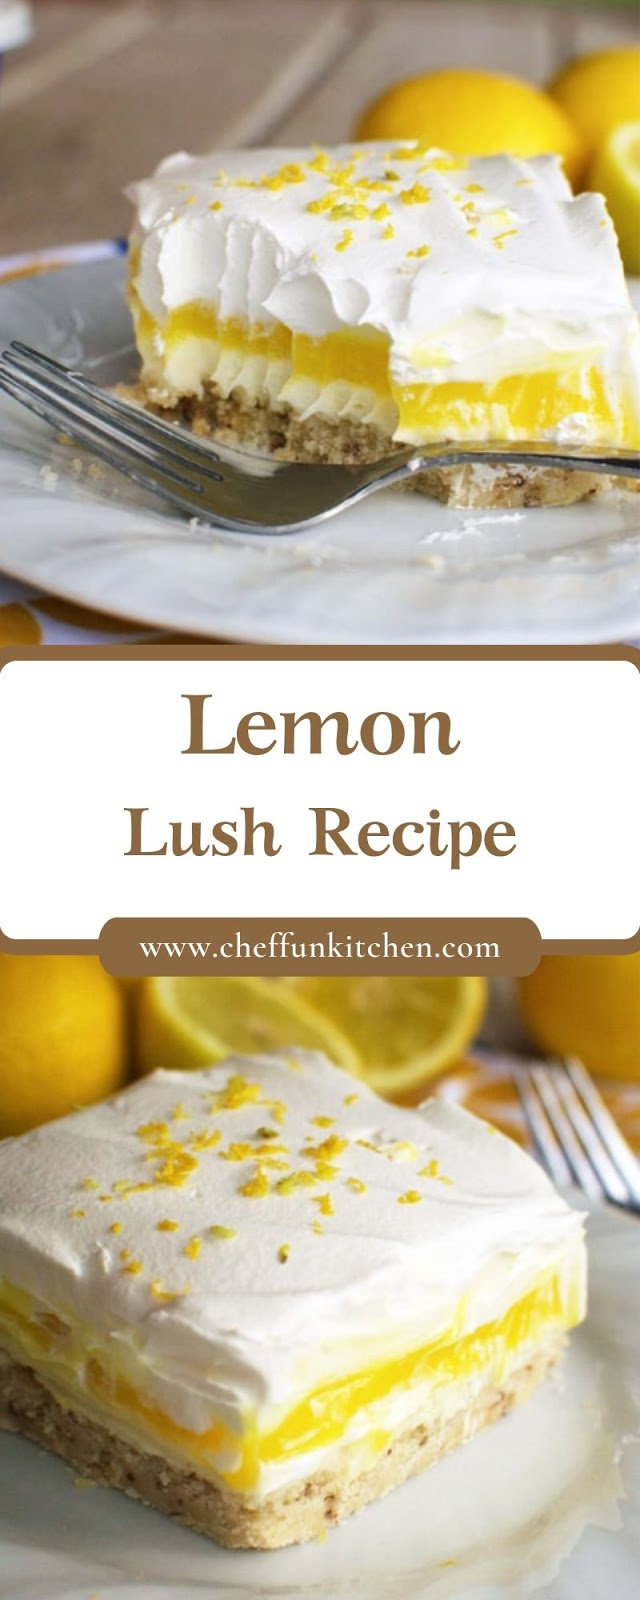 Lemon Lush Recipe